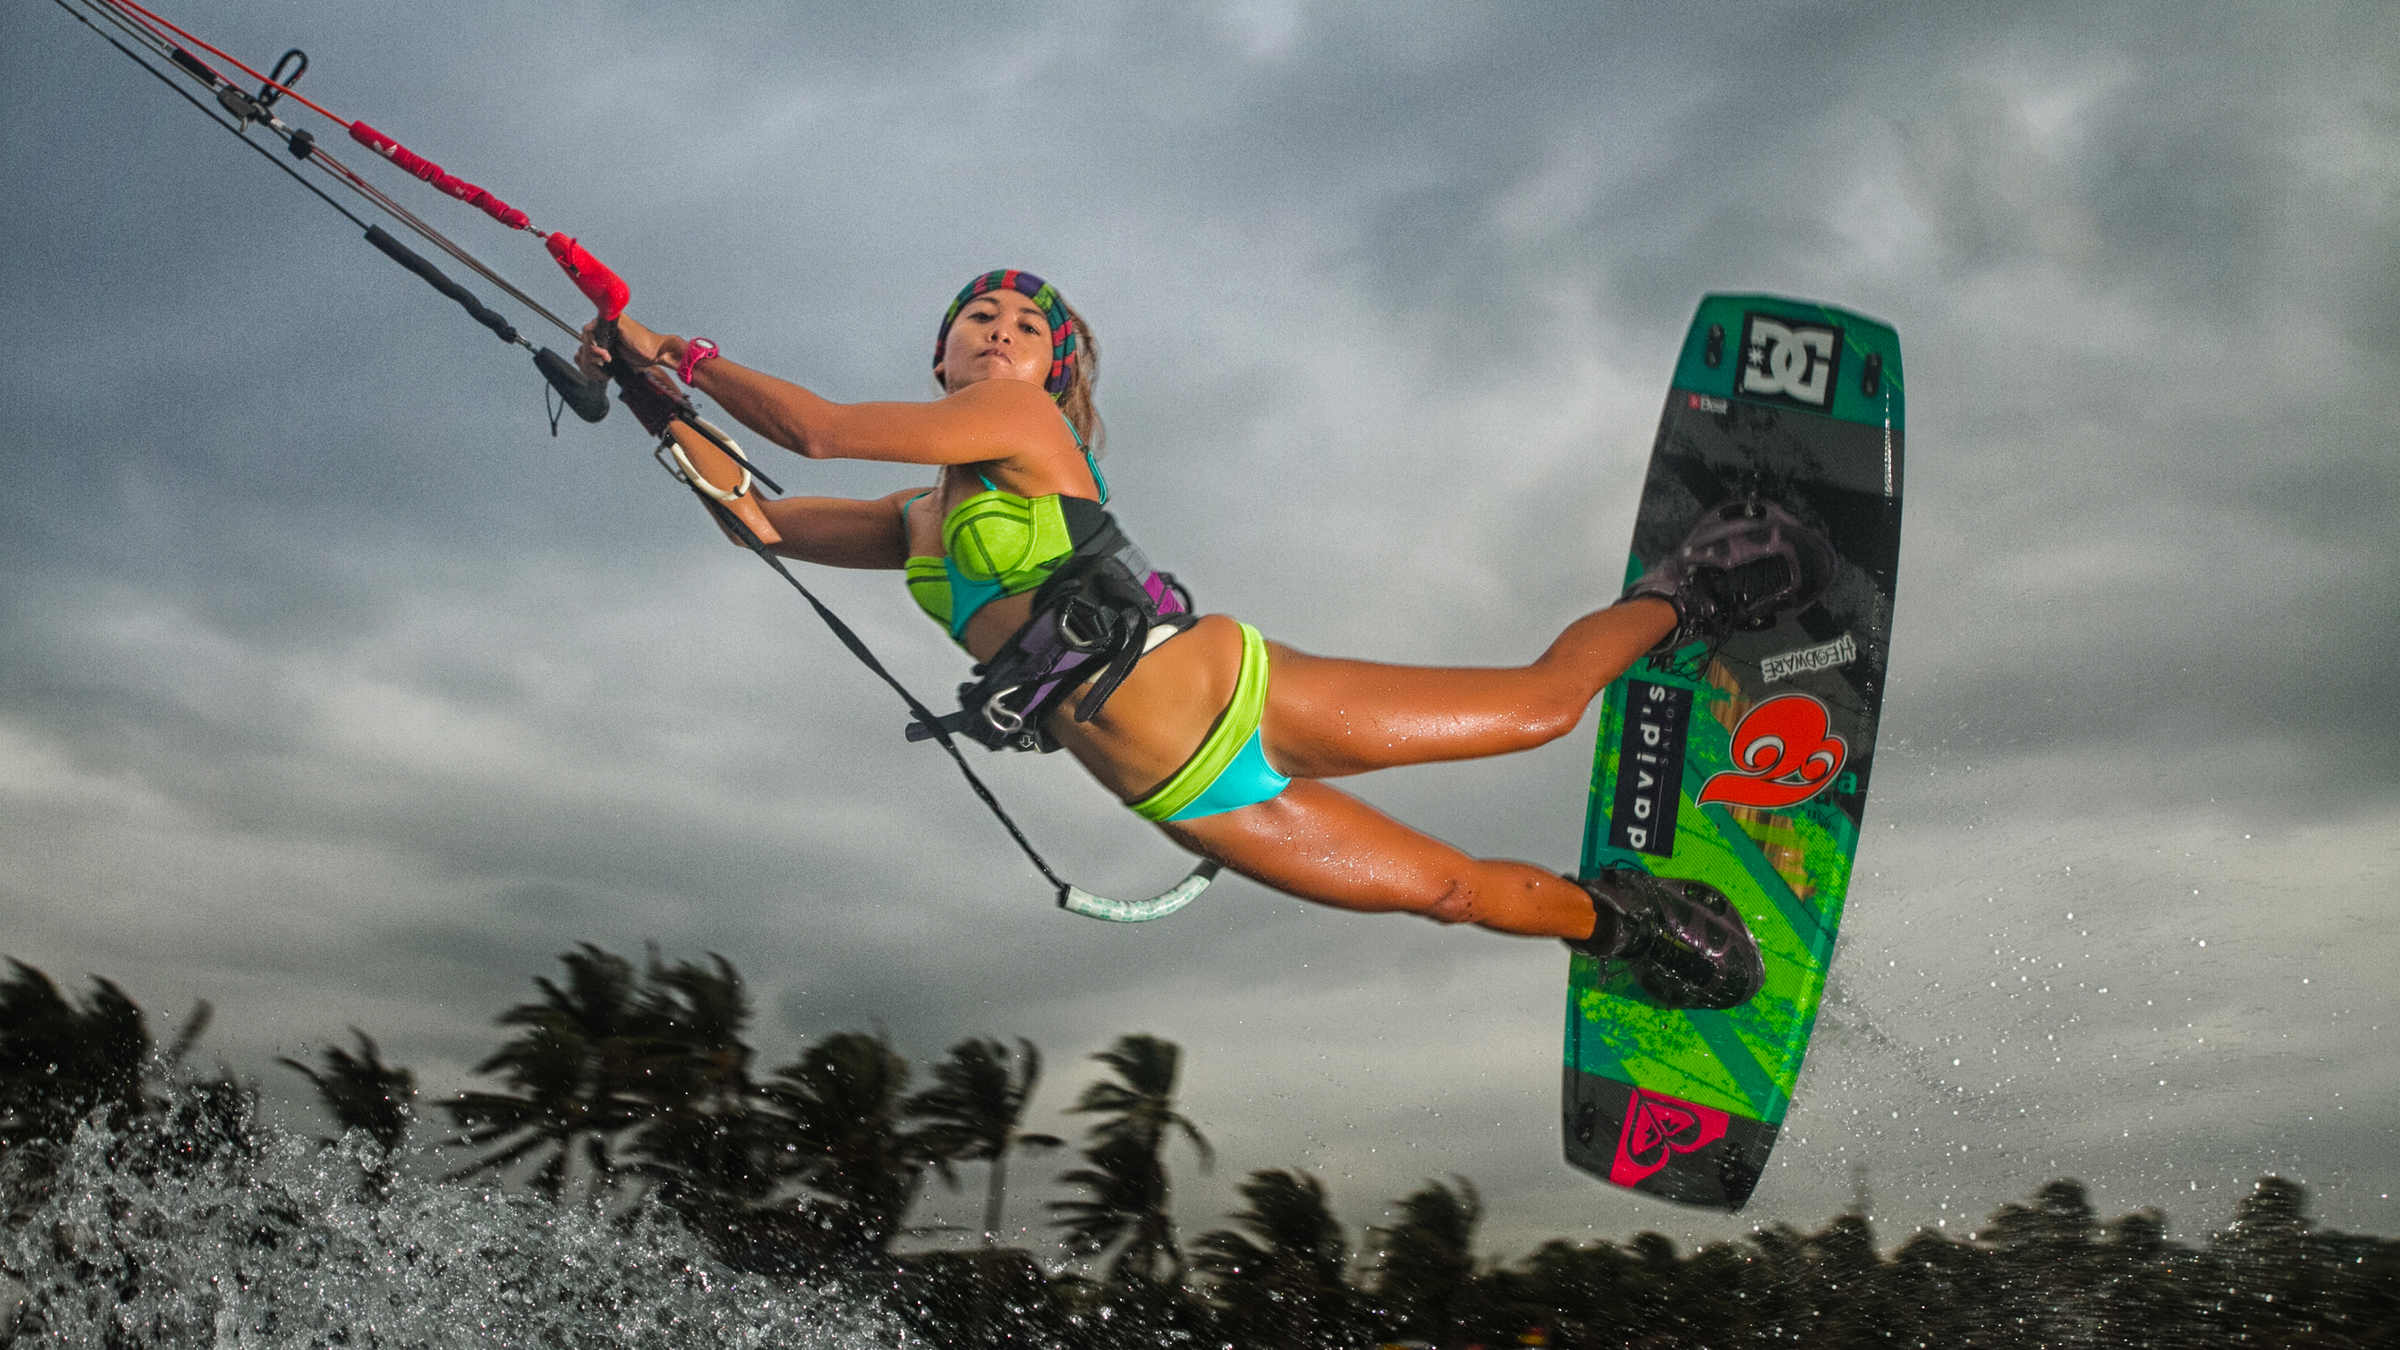 kitesurf wallpaper image - Kitesurfer Paula Rosales with a railey jump in bikini - in resolution: High Definition - HD 16:9 2400 X 1350